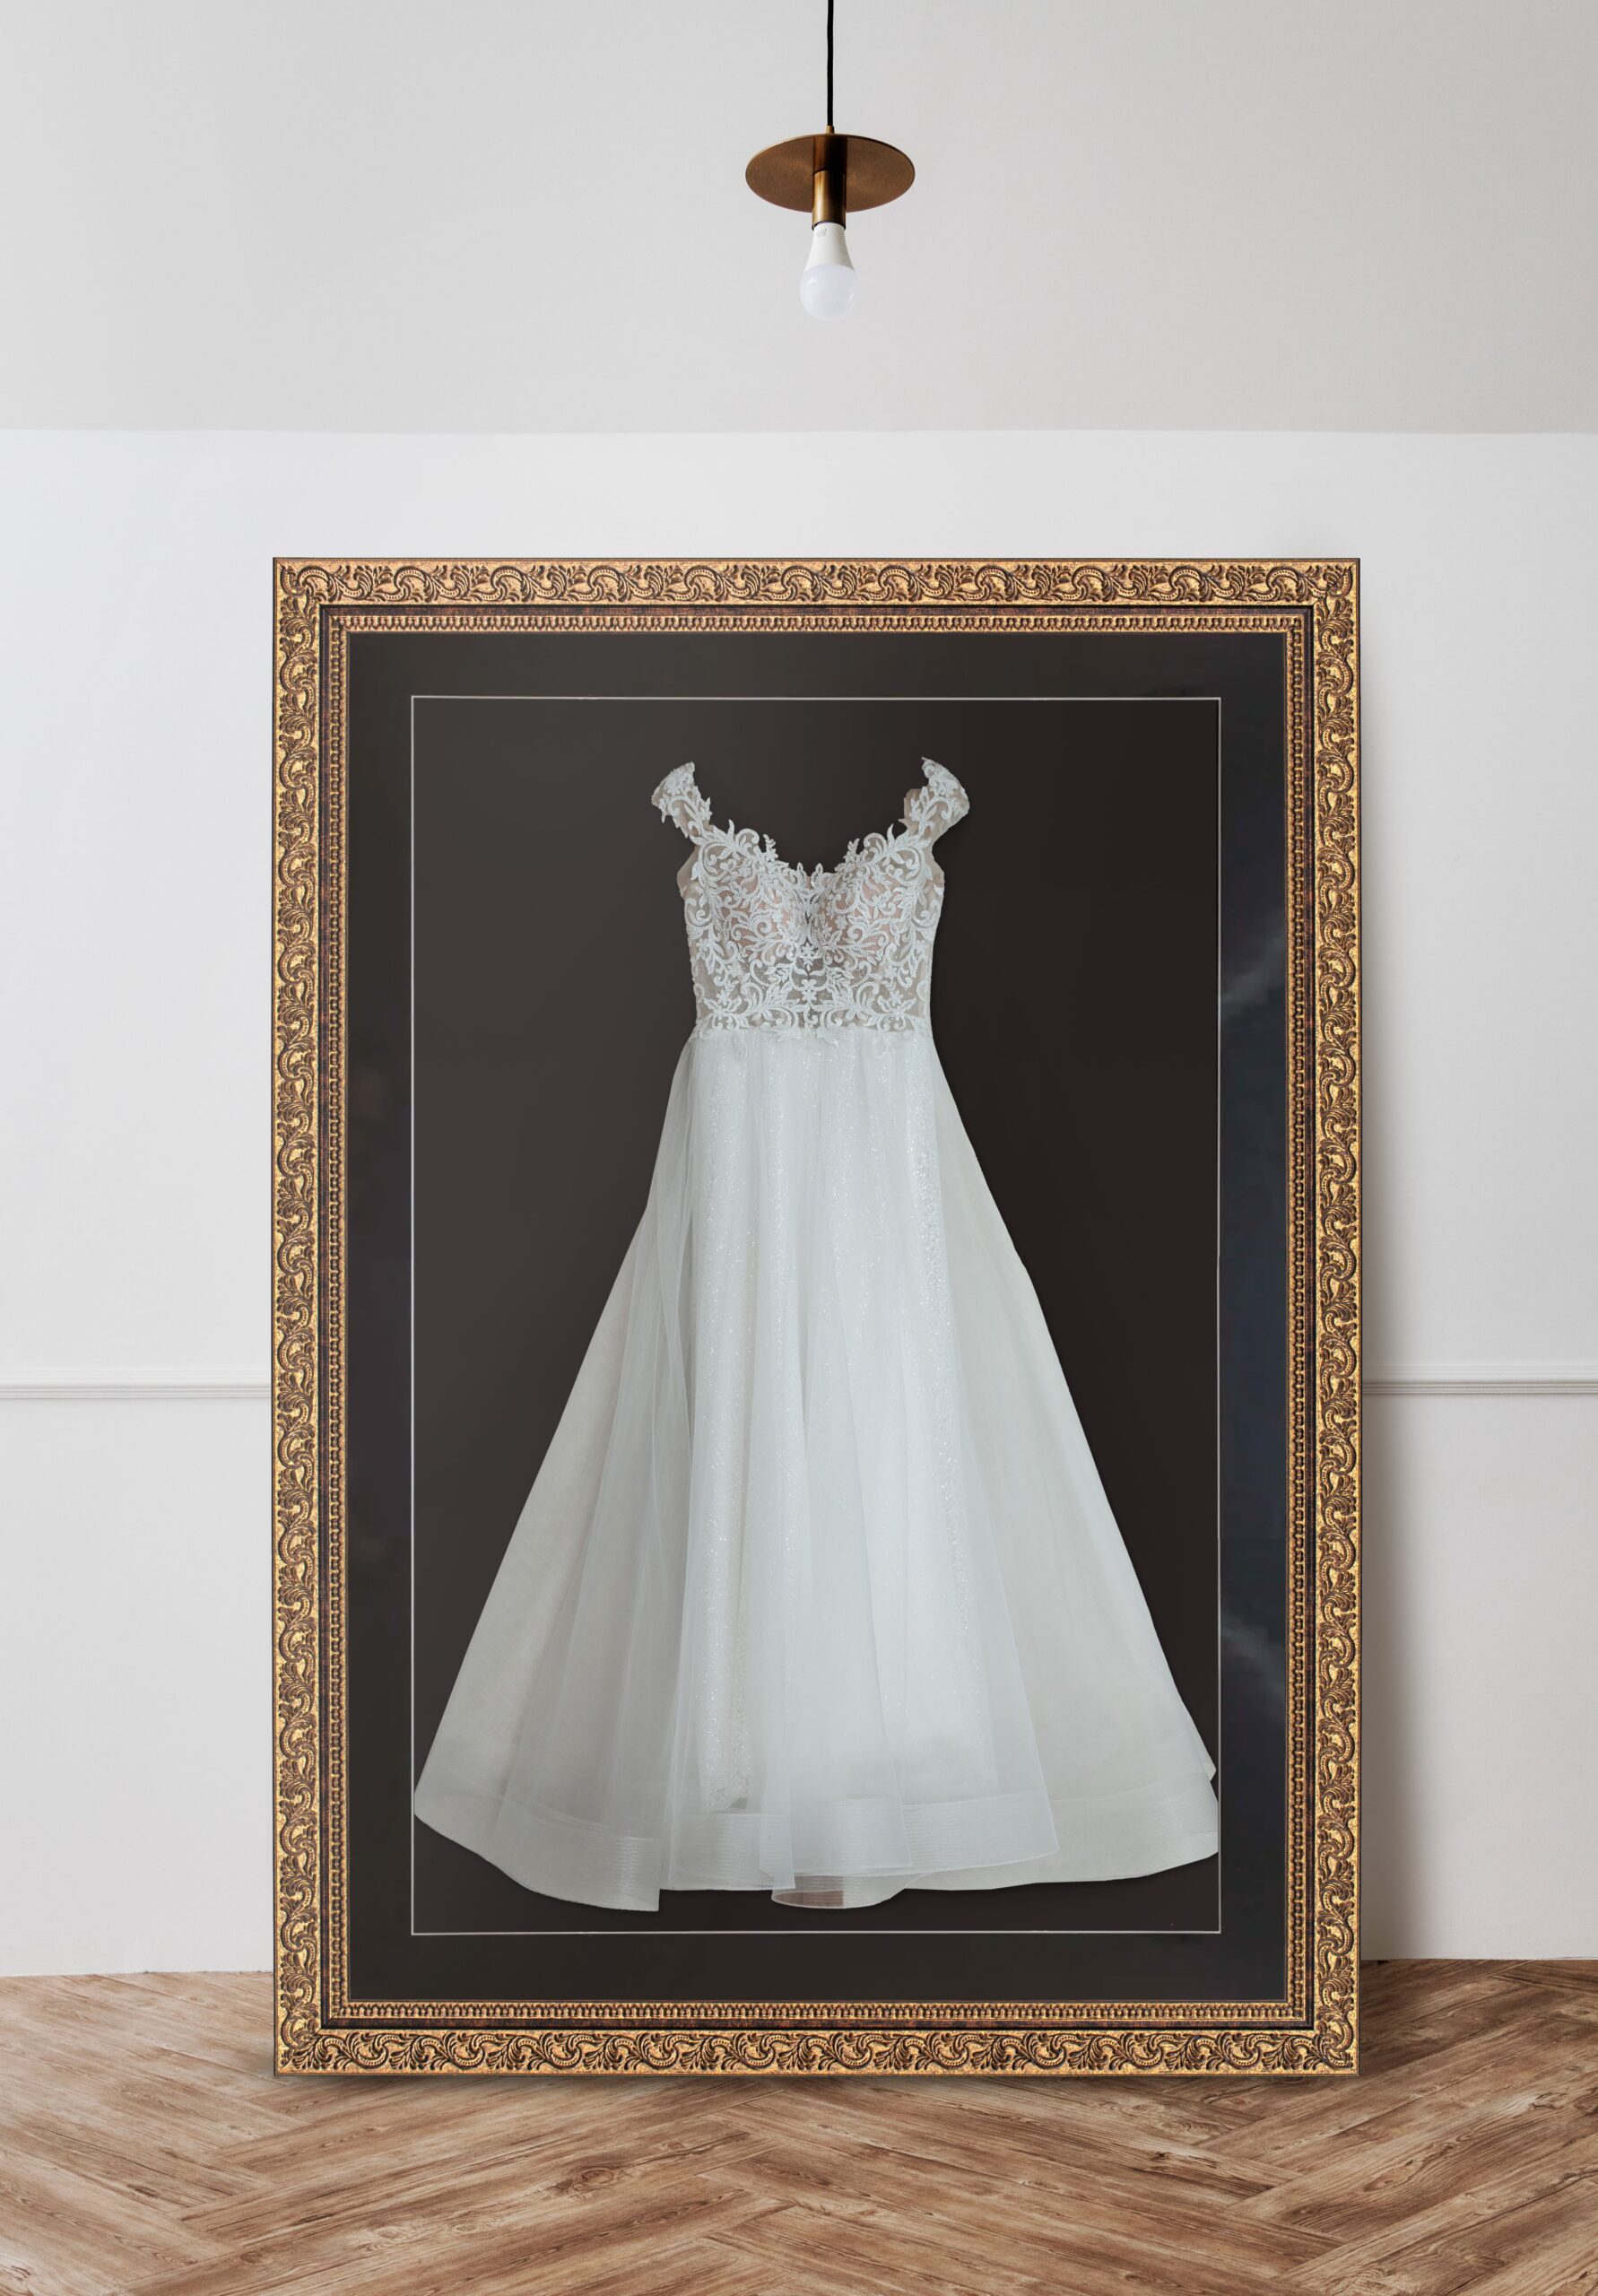 5 Ways to Preserve Wedding Memorabilia | The FrameStore